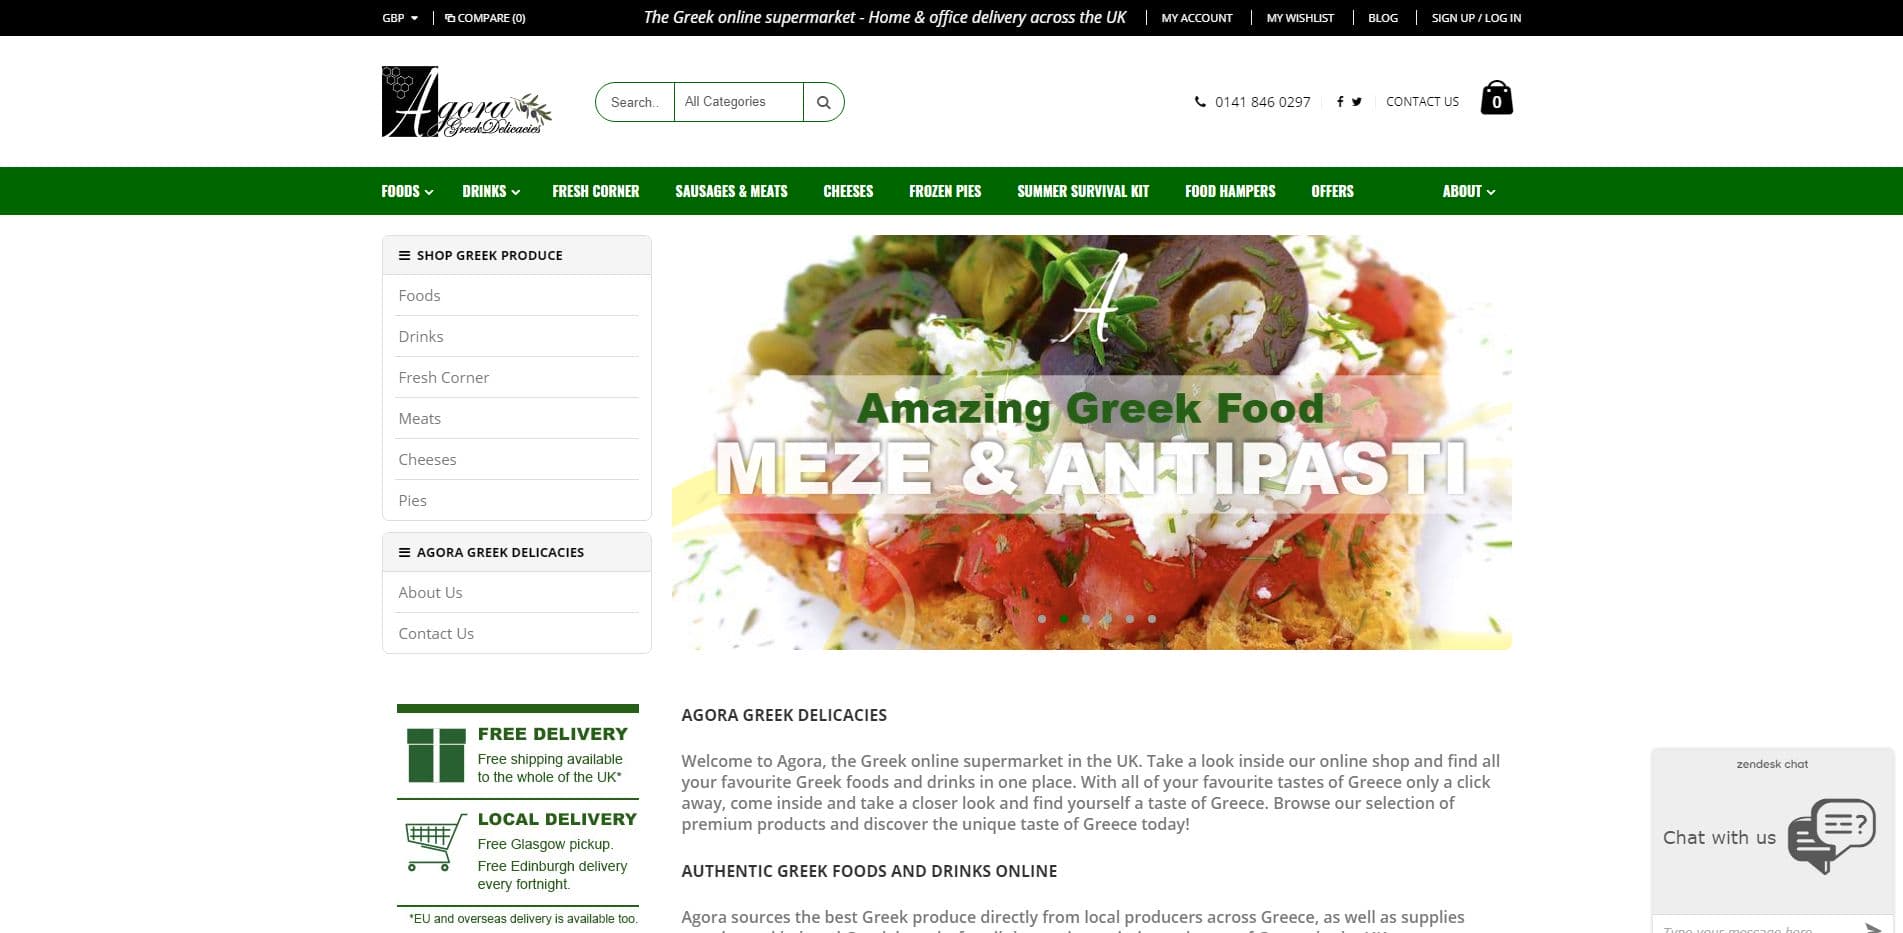 Buy-Authentic-Greek-Foods-Drinks-Online-UK-Greek-Supermarket